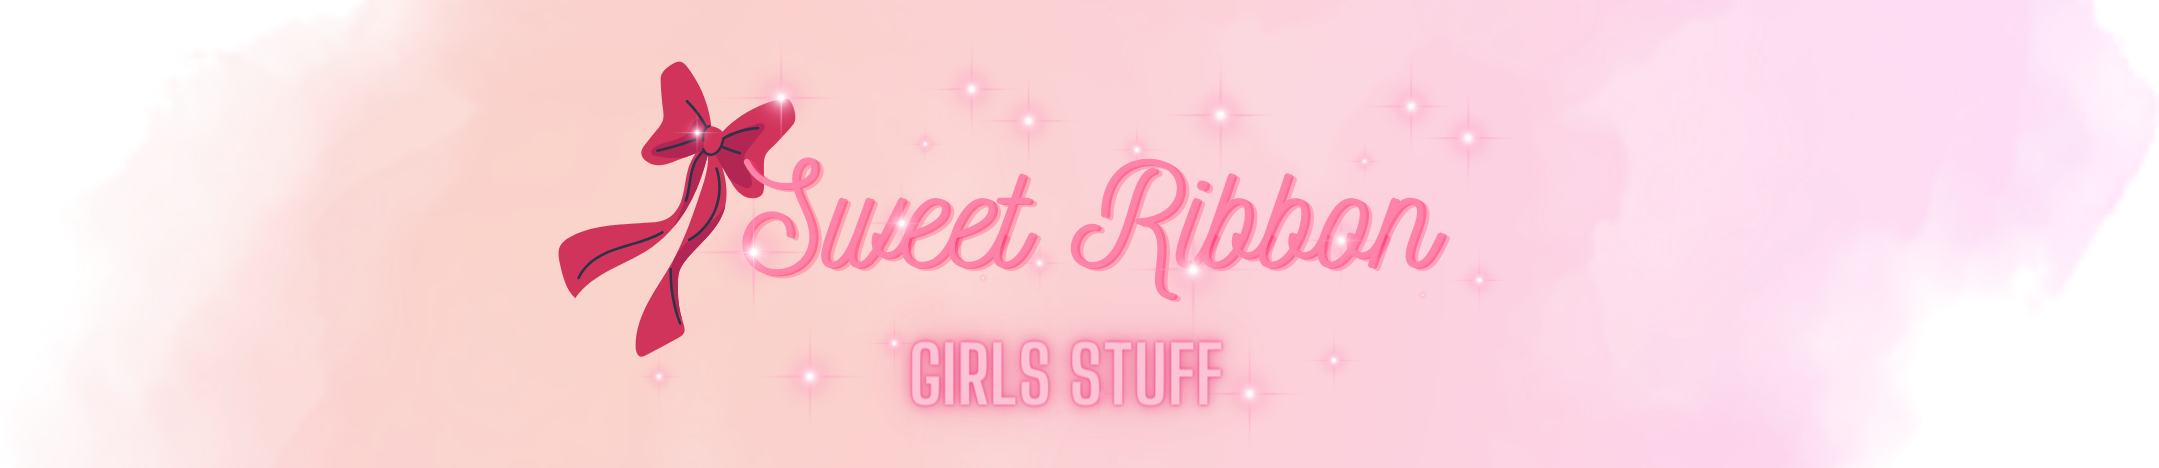 sweet ribbon